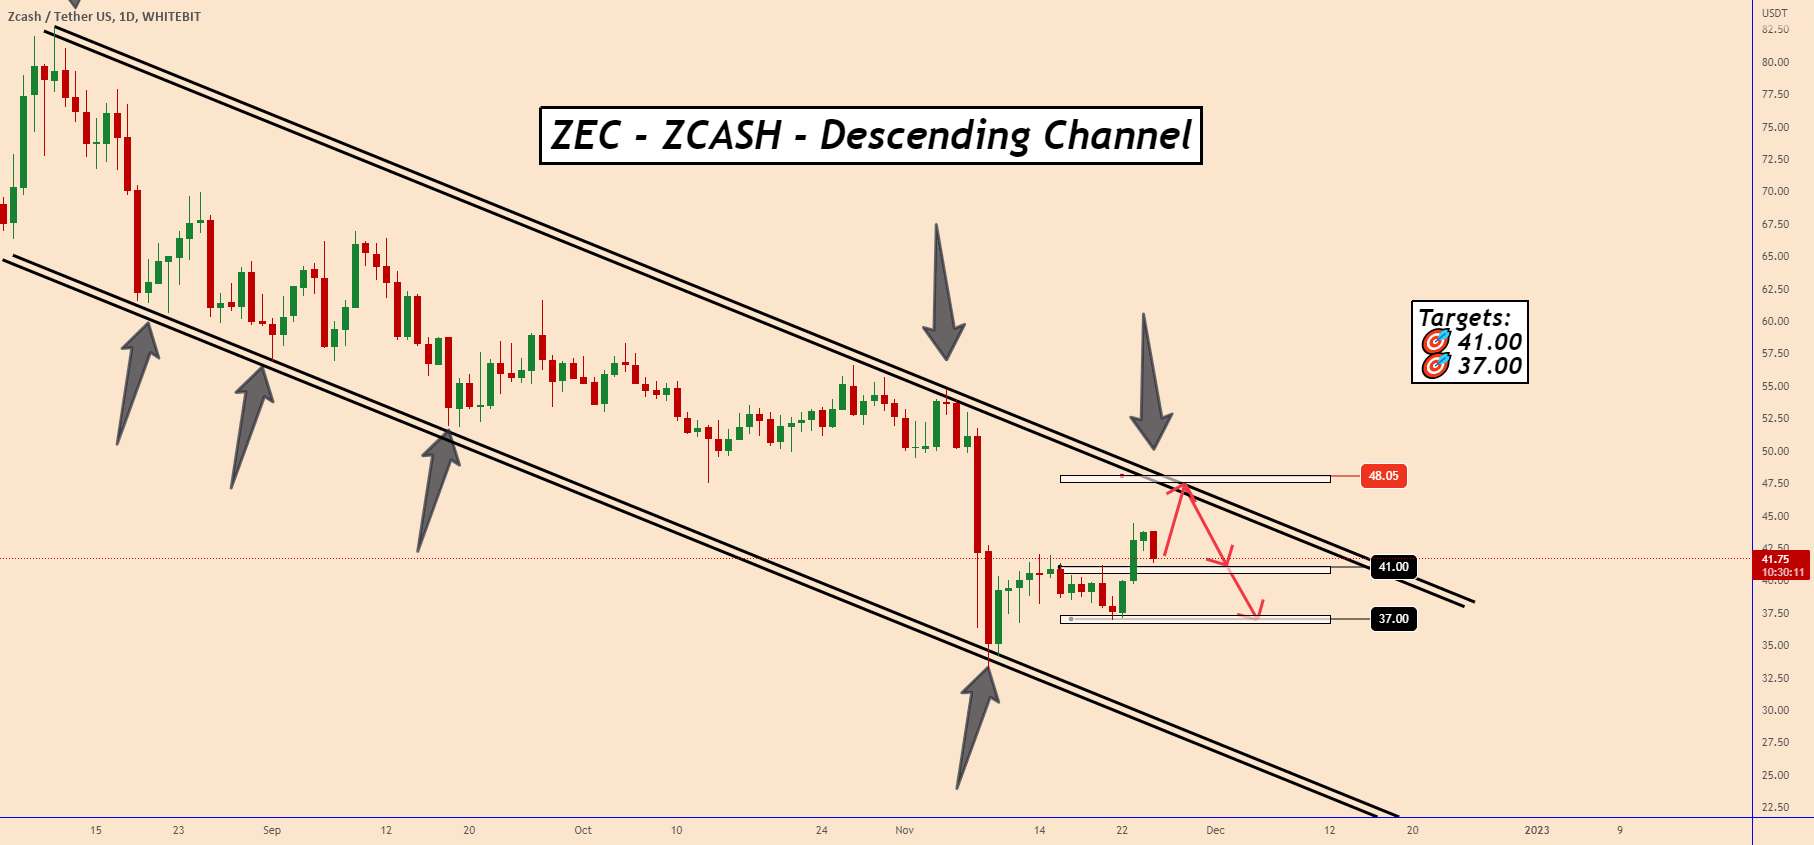 ZEC (Zcash): قیمت همچنان به کاهش حجم خود ادامه می دهد